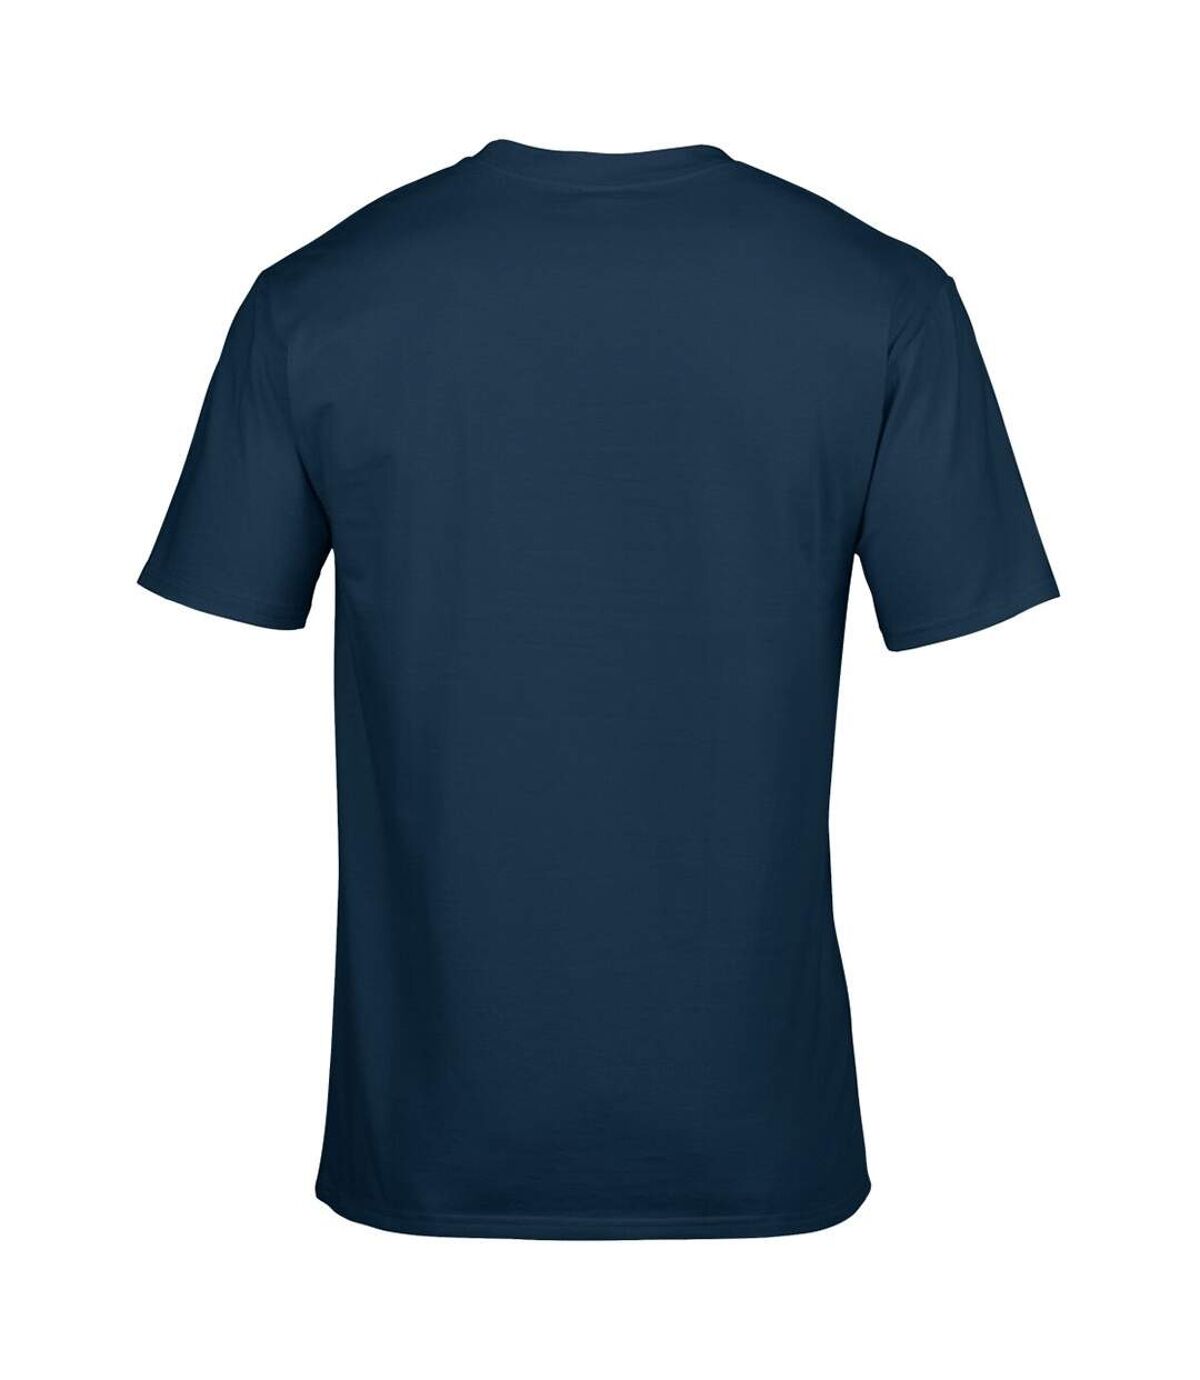 Gildan Mens Premium Cotton Ring Spun Short Sleeve T-Shirt (Navy)